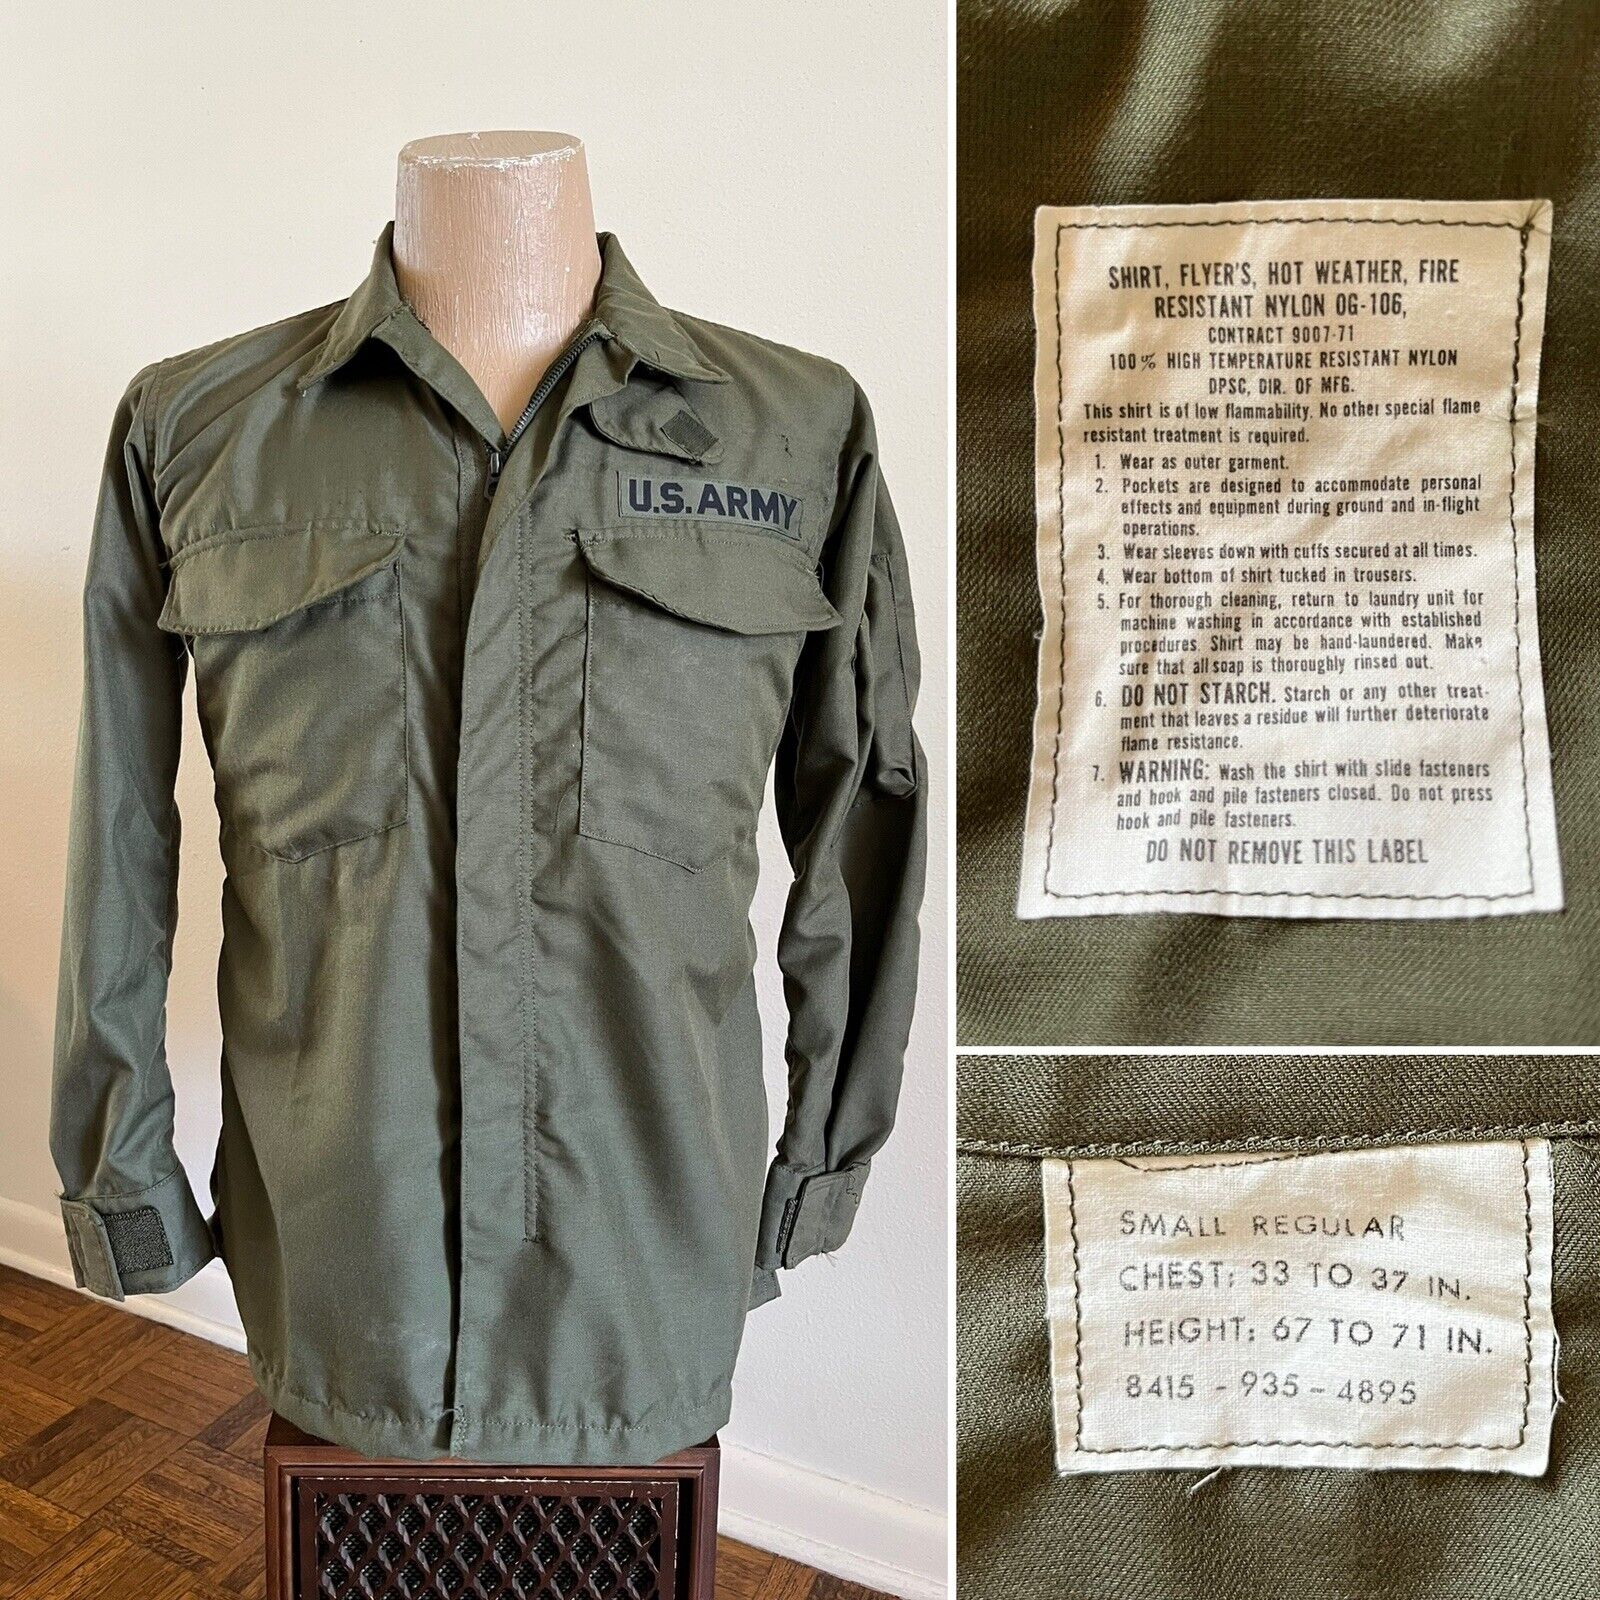 VTG 1971 US Army Hot Weather Flight Flyers Shirt SMALL REGULAR OG-106 Jacket 70s